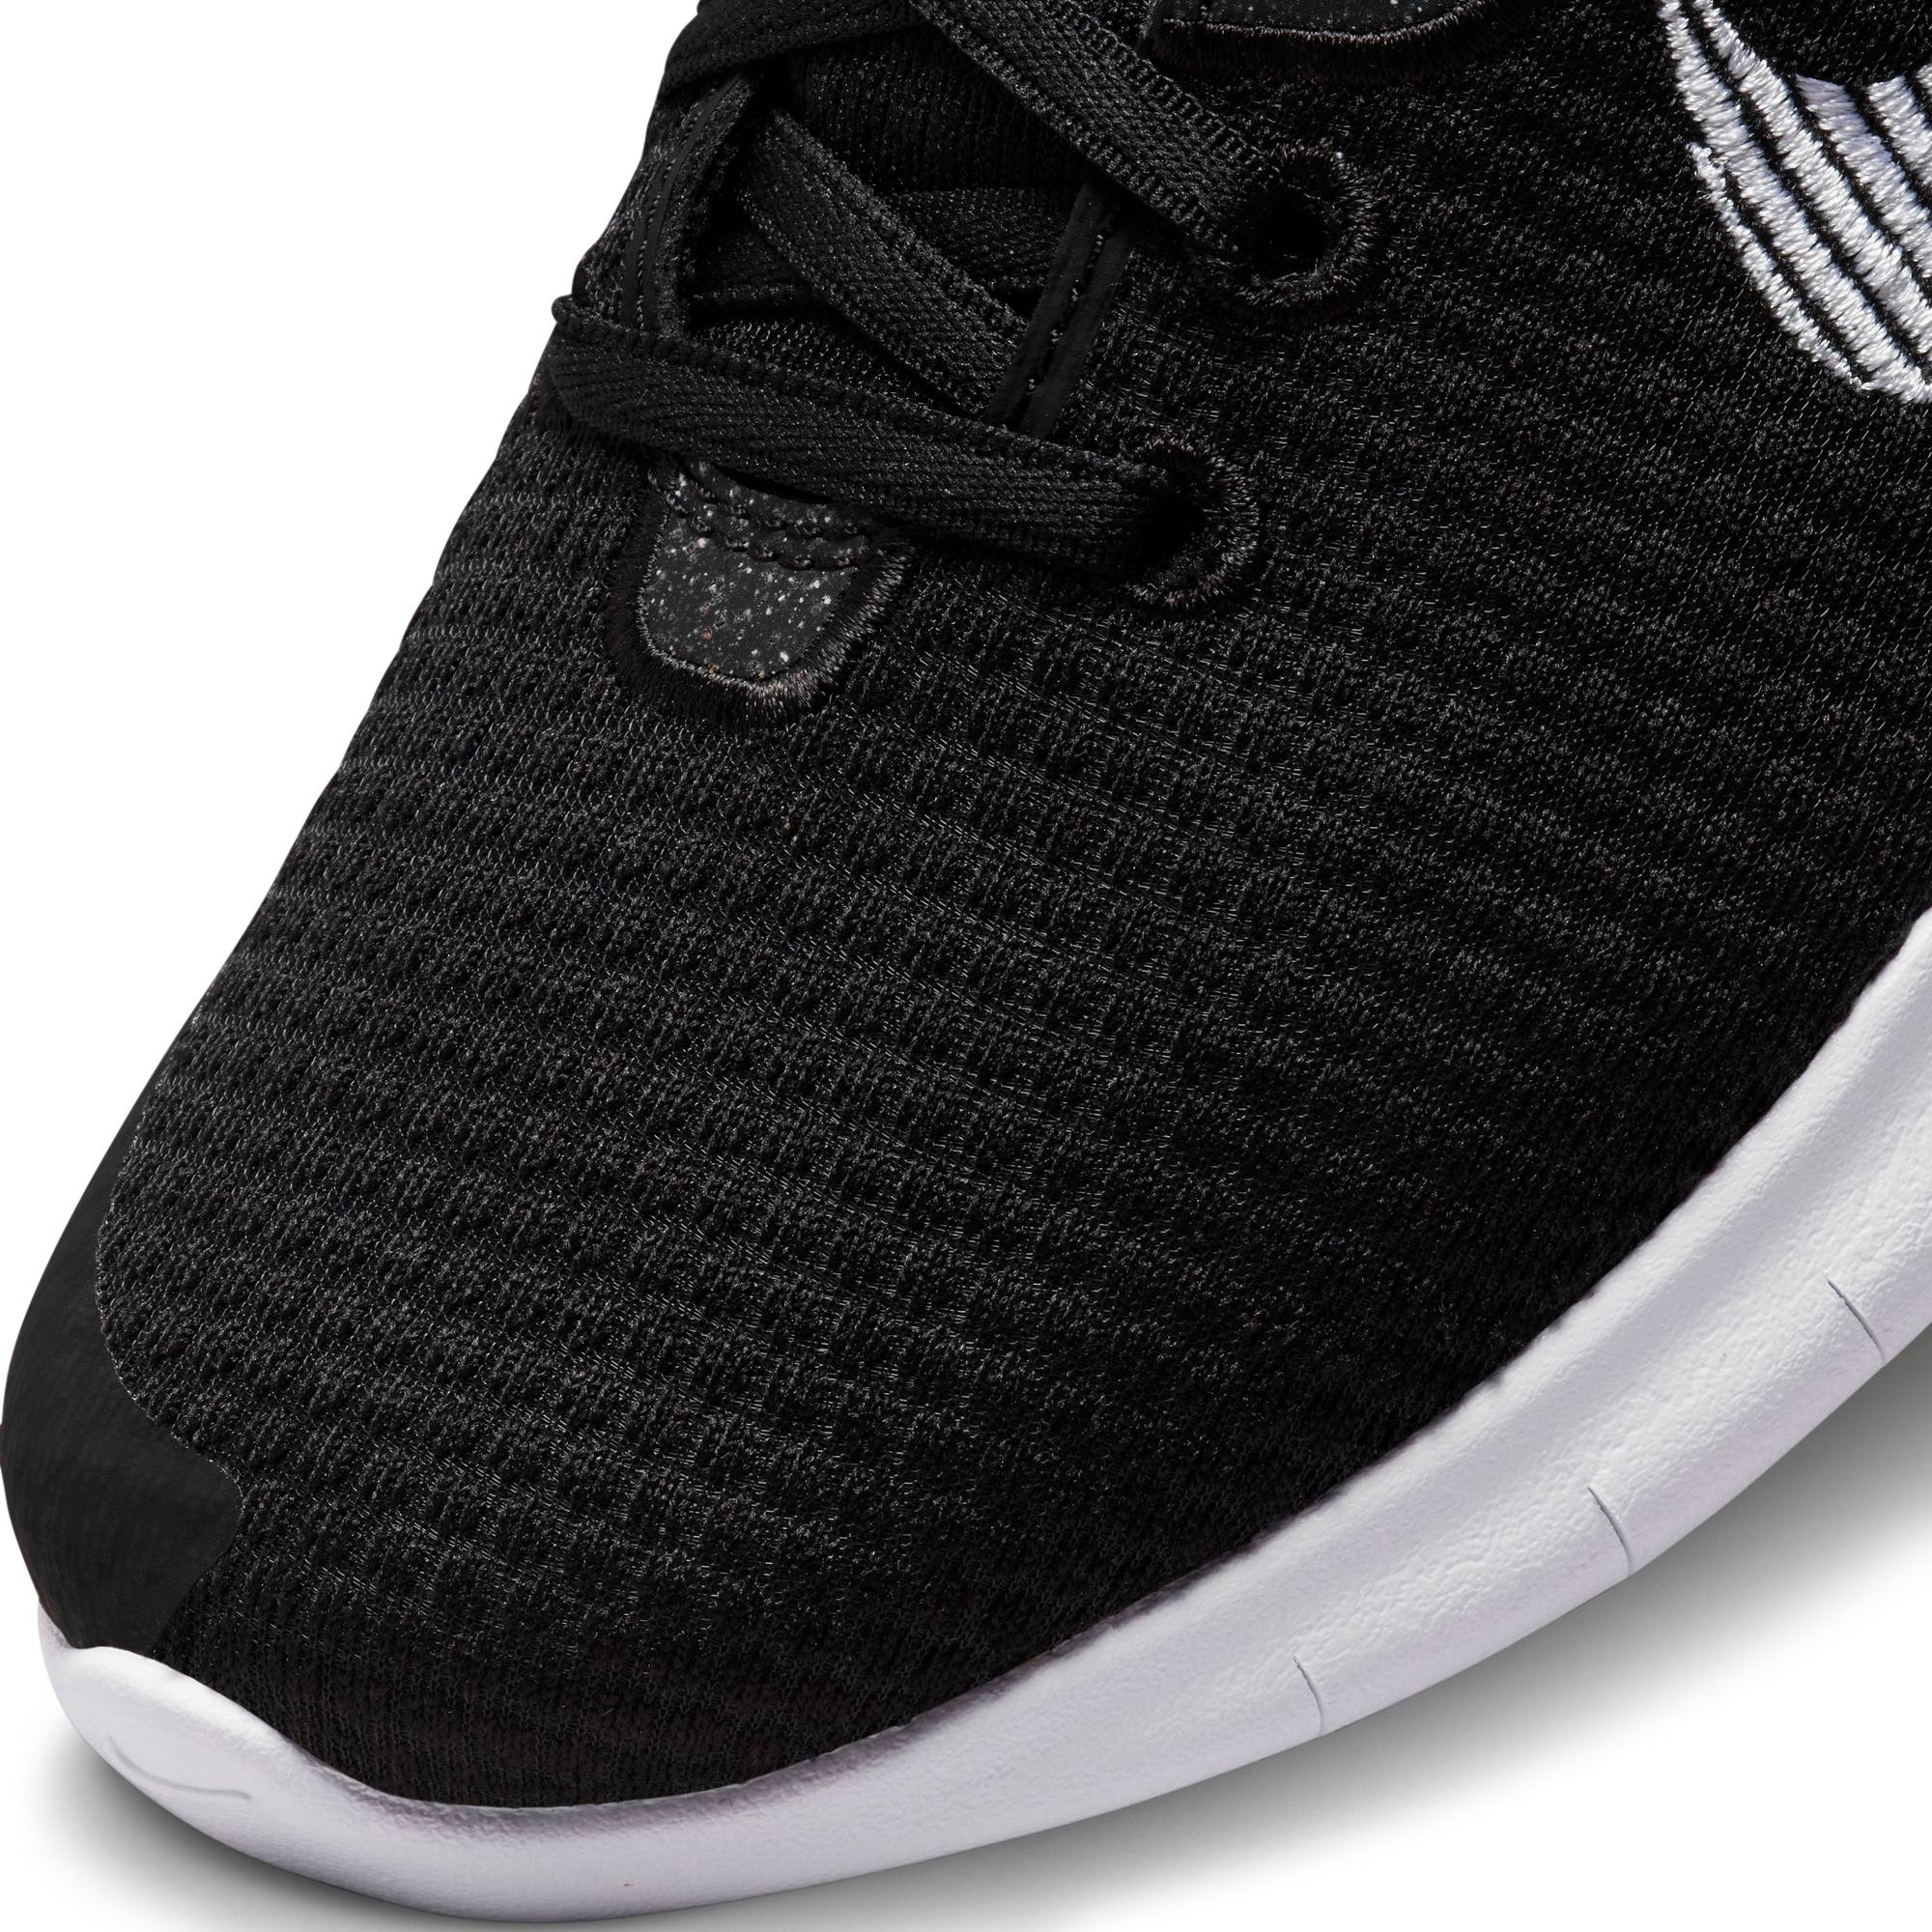 Nike NEXT RUN schwarz-weiß EXPERIENCE FLEX 11 Laufschuh NATURE